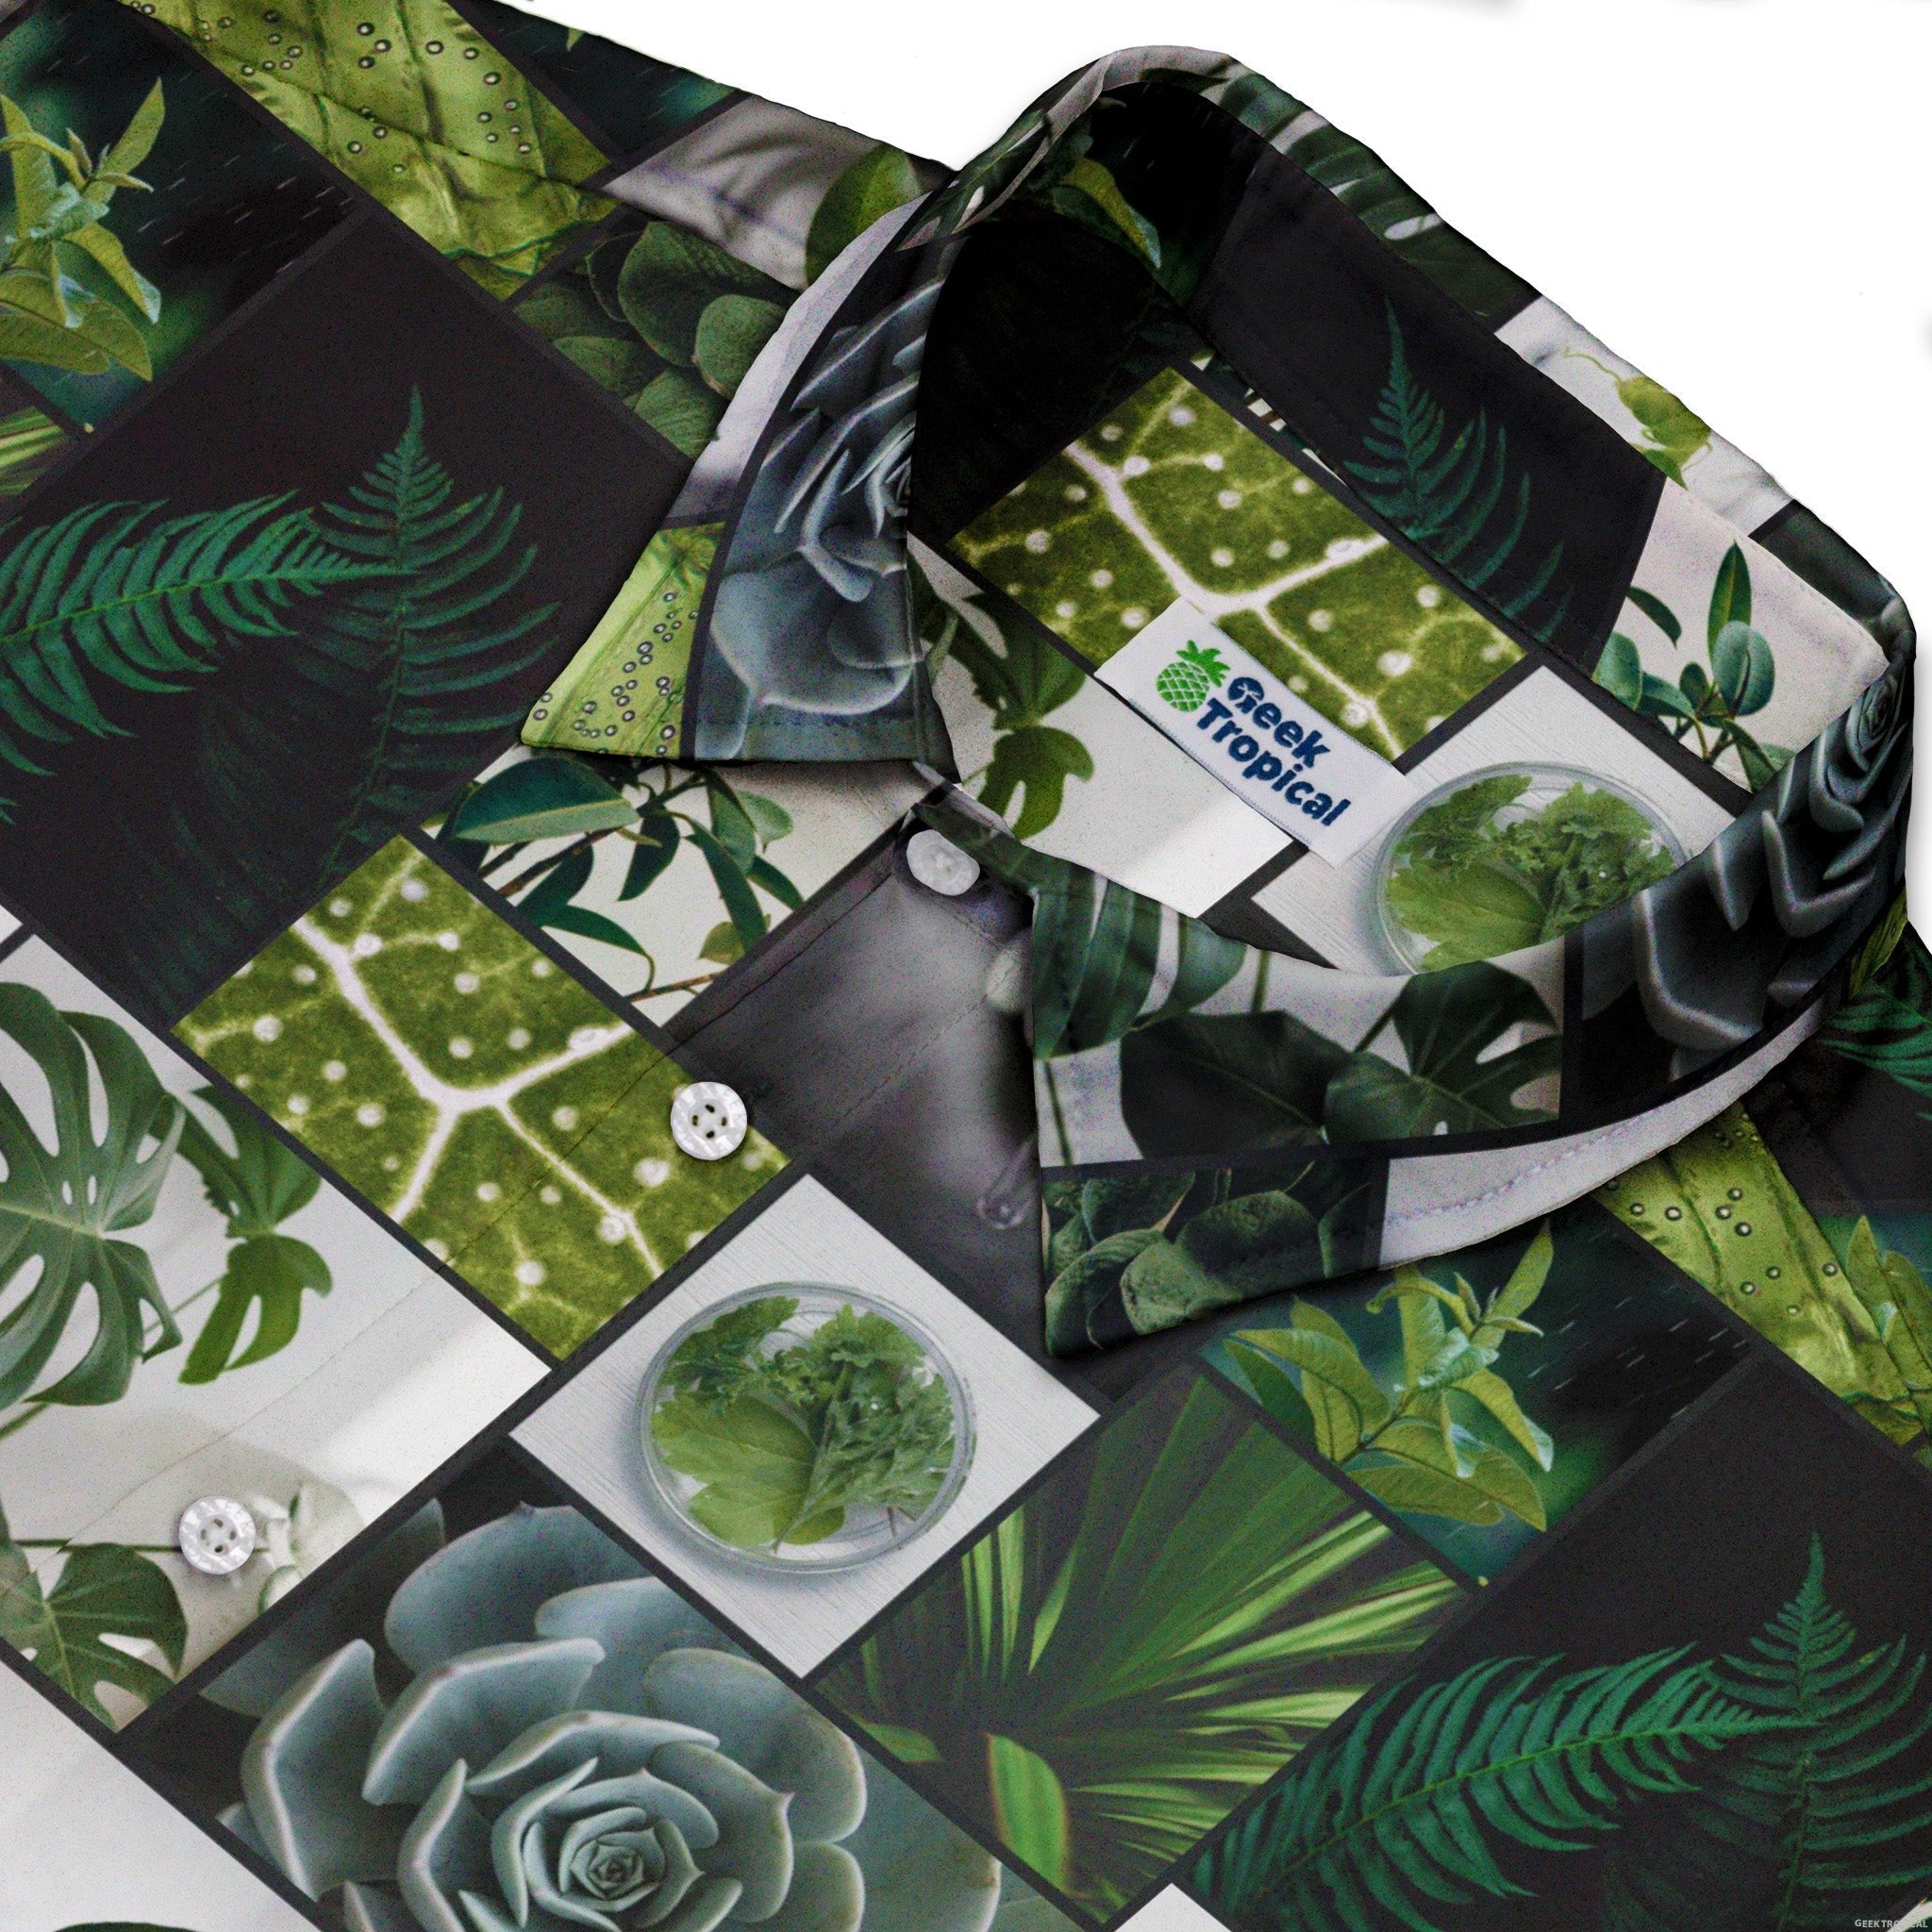 Botany Frames Button Up Shirt - adult sizing - Botany Print -